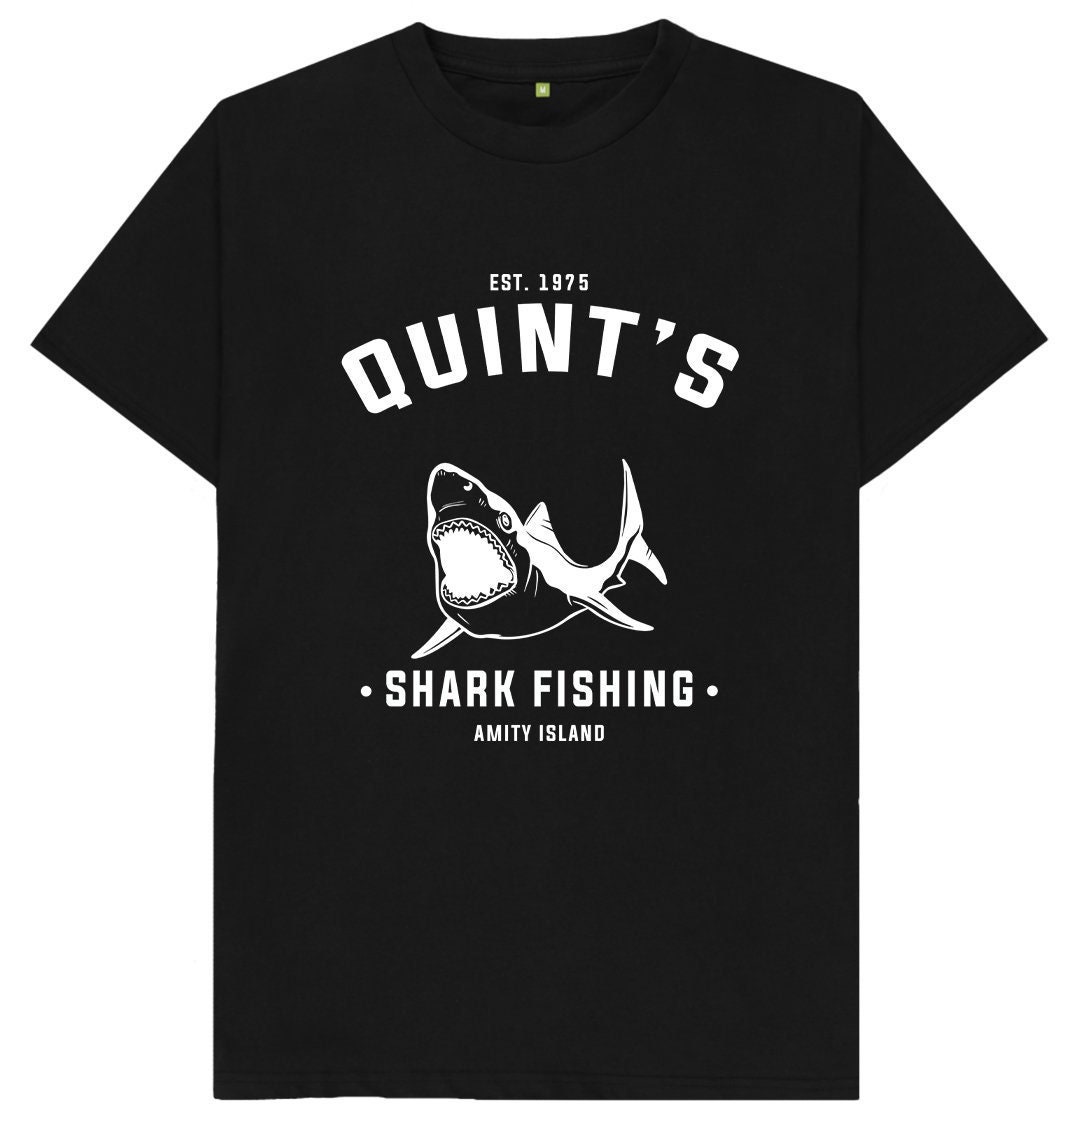 Buy Quint's Shark Fishing Amity Island Est. 1975 Mens Womens Kids